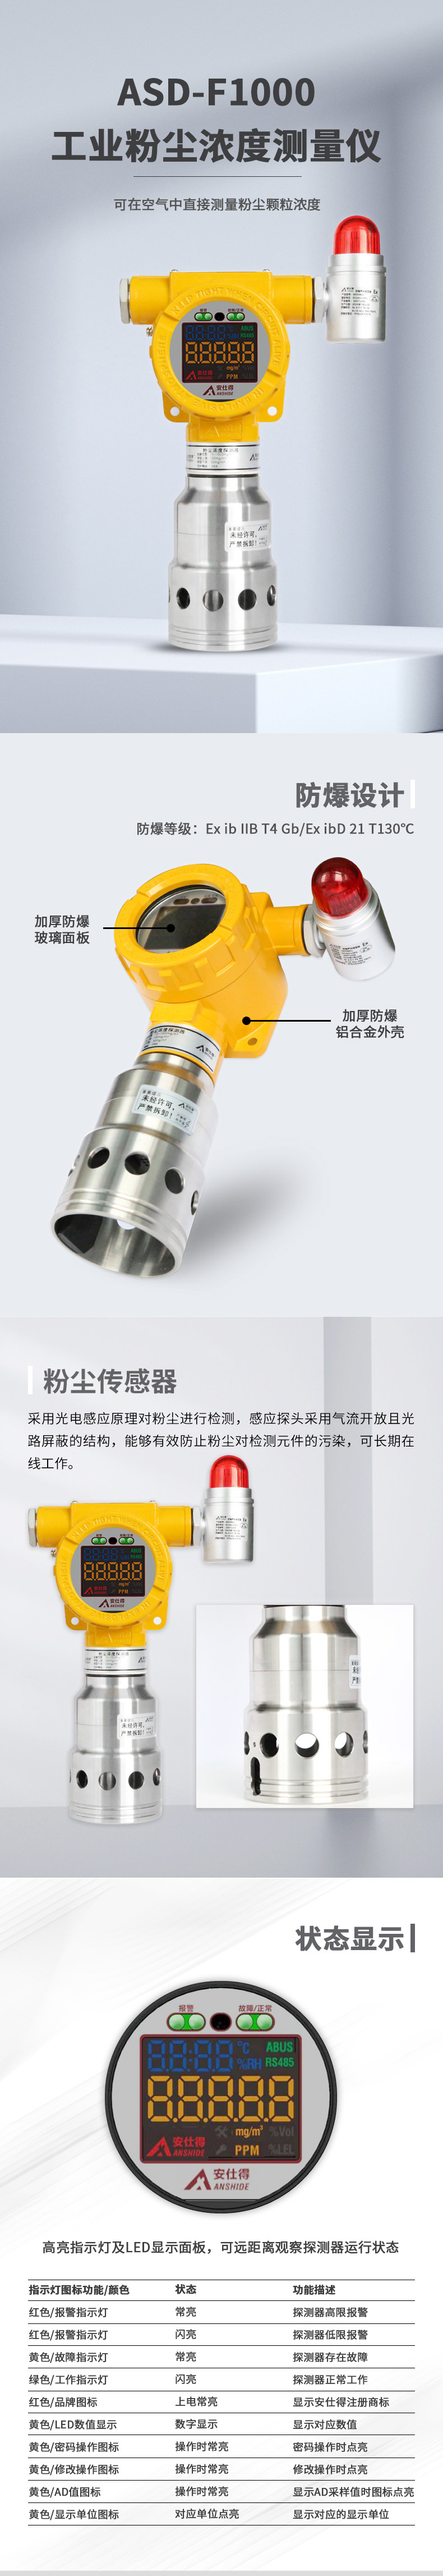 ASD-F1000工业粉尘浓度测量仪1